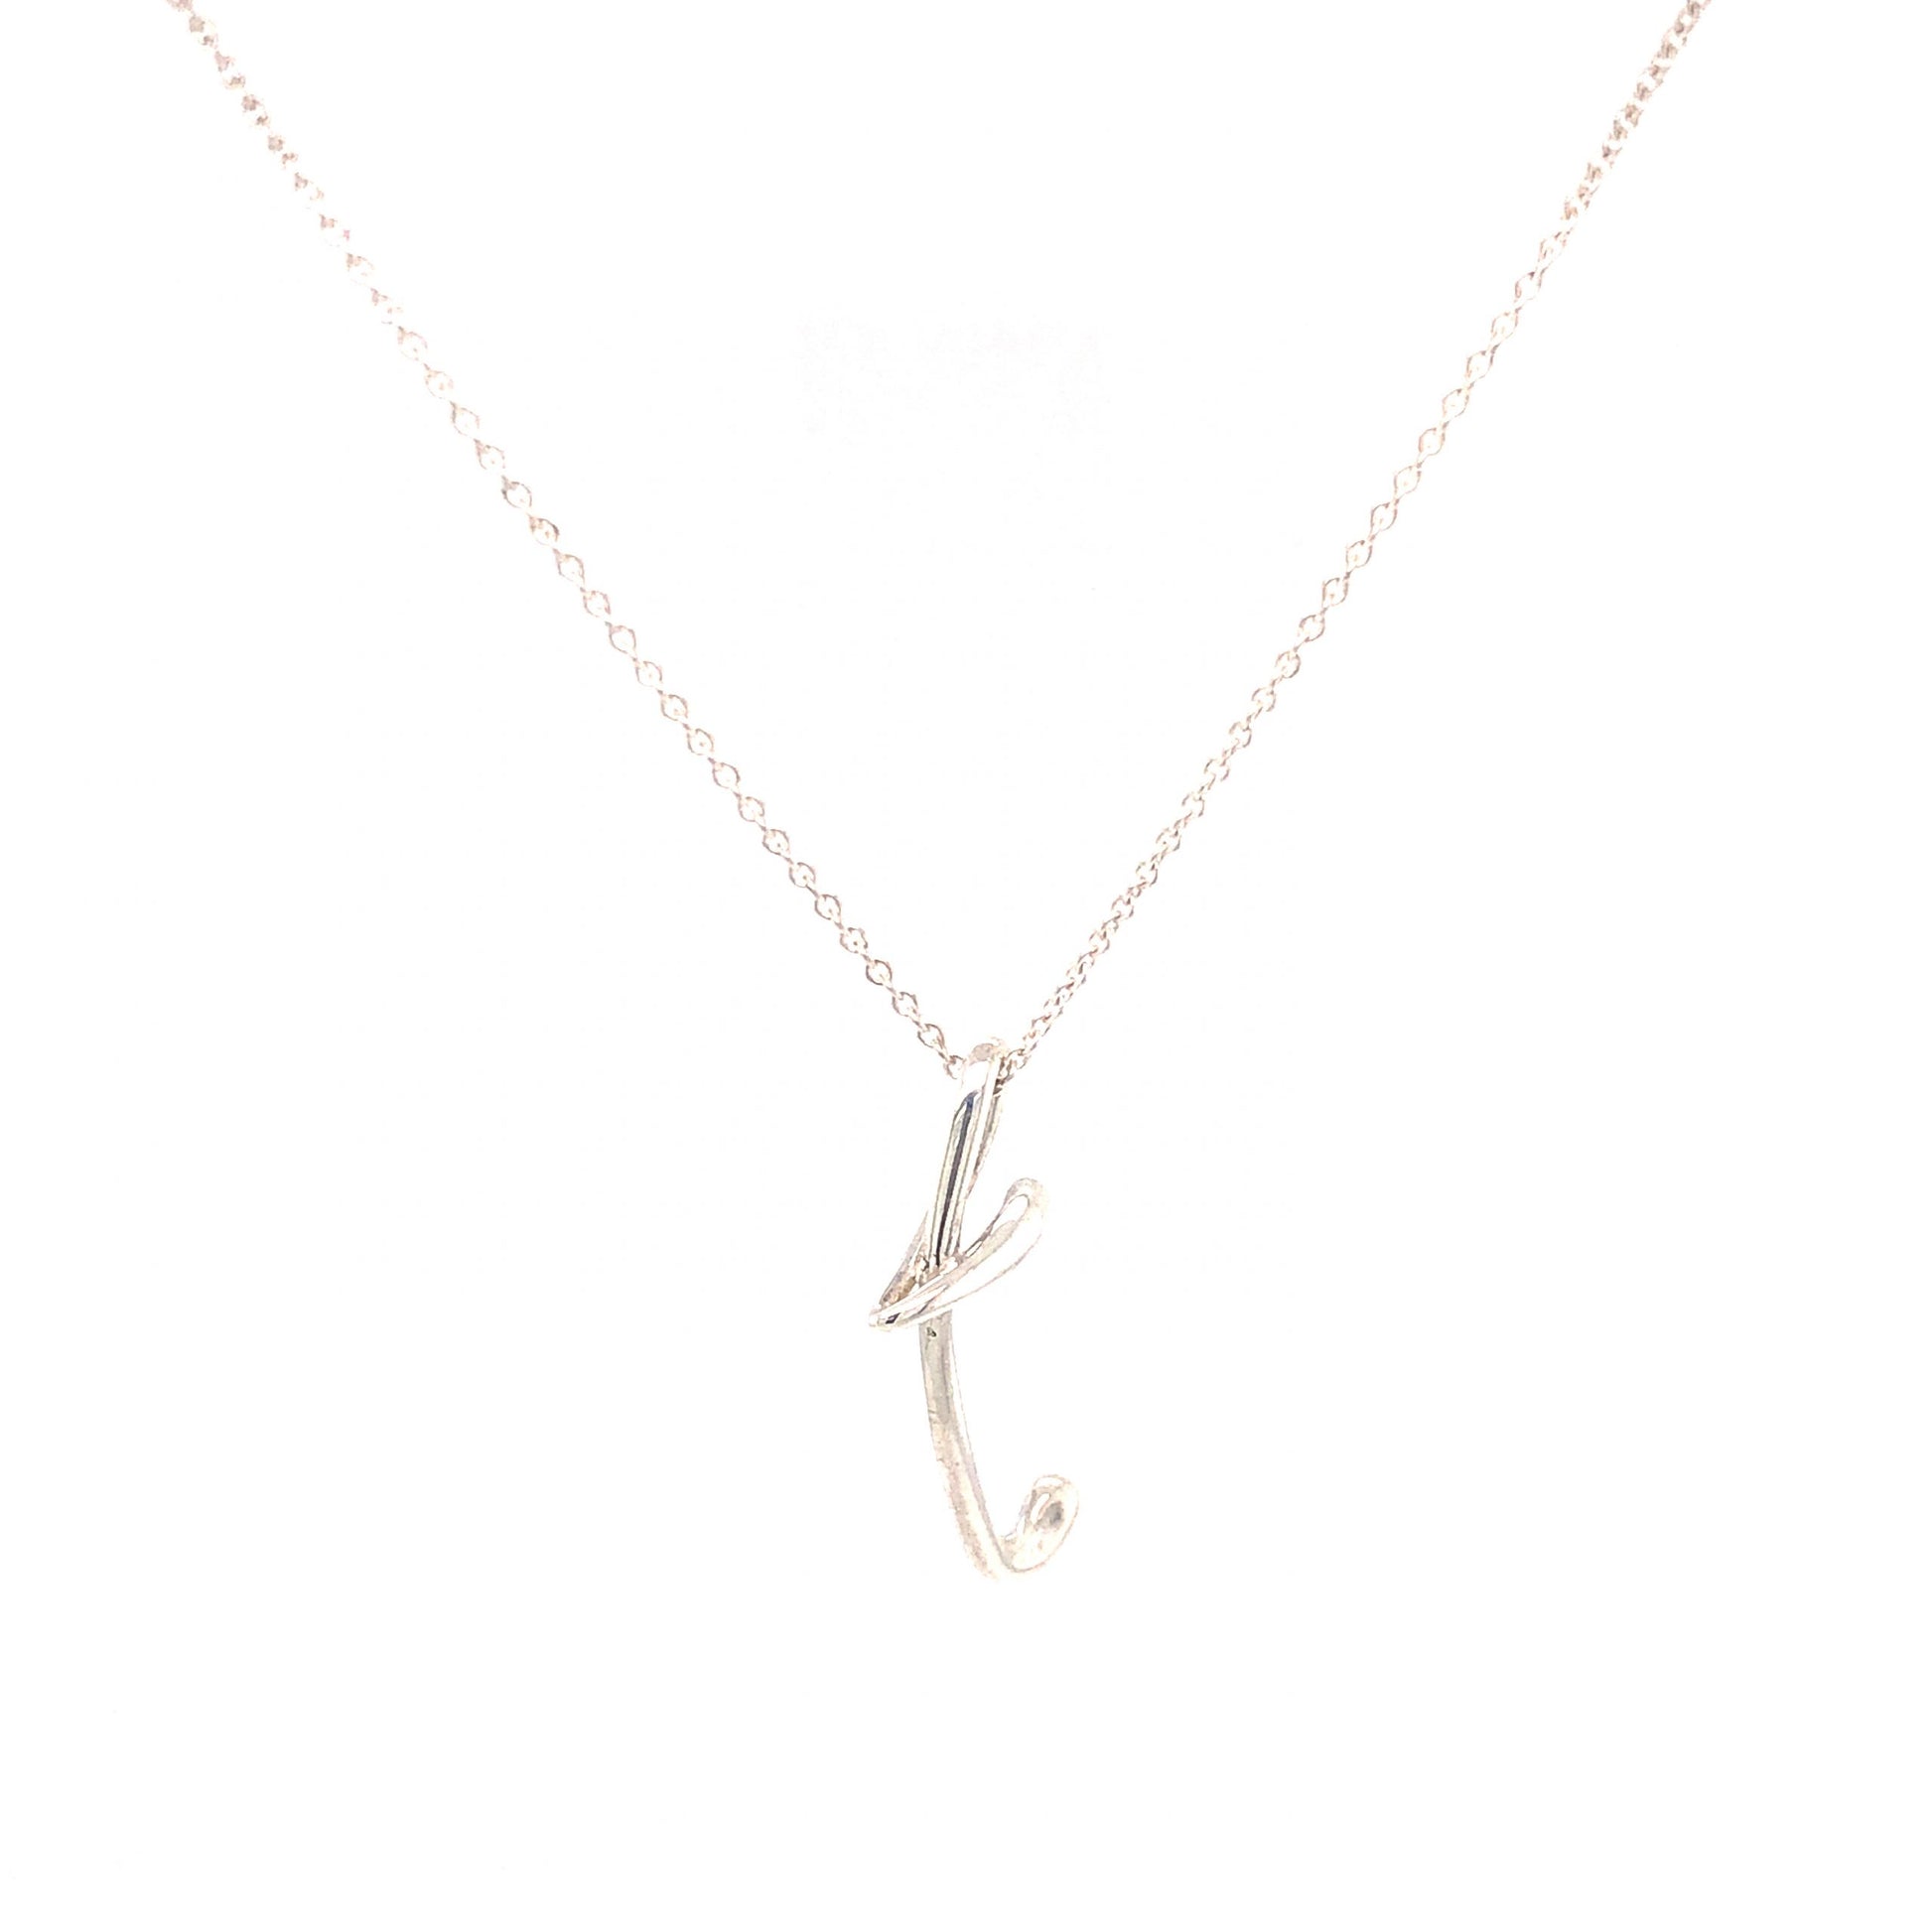 Tiffany & Co. Elsa Peretti "T" Necklace in Sterling Silver